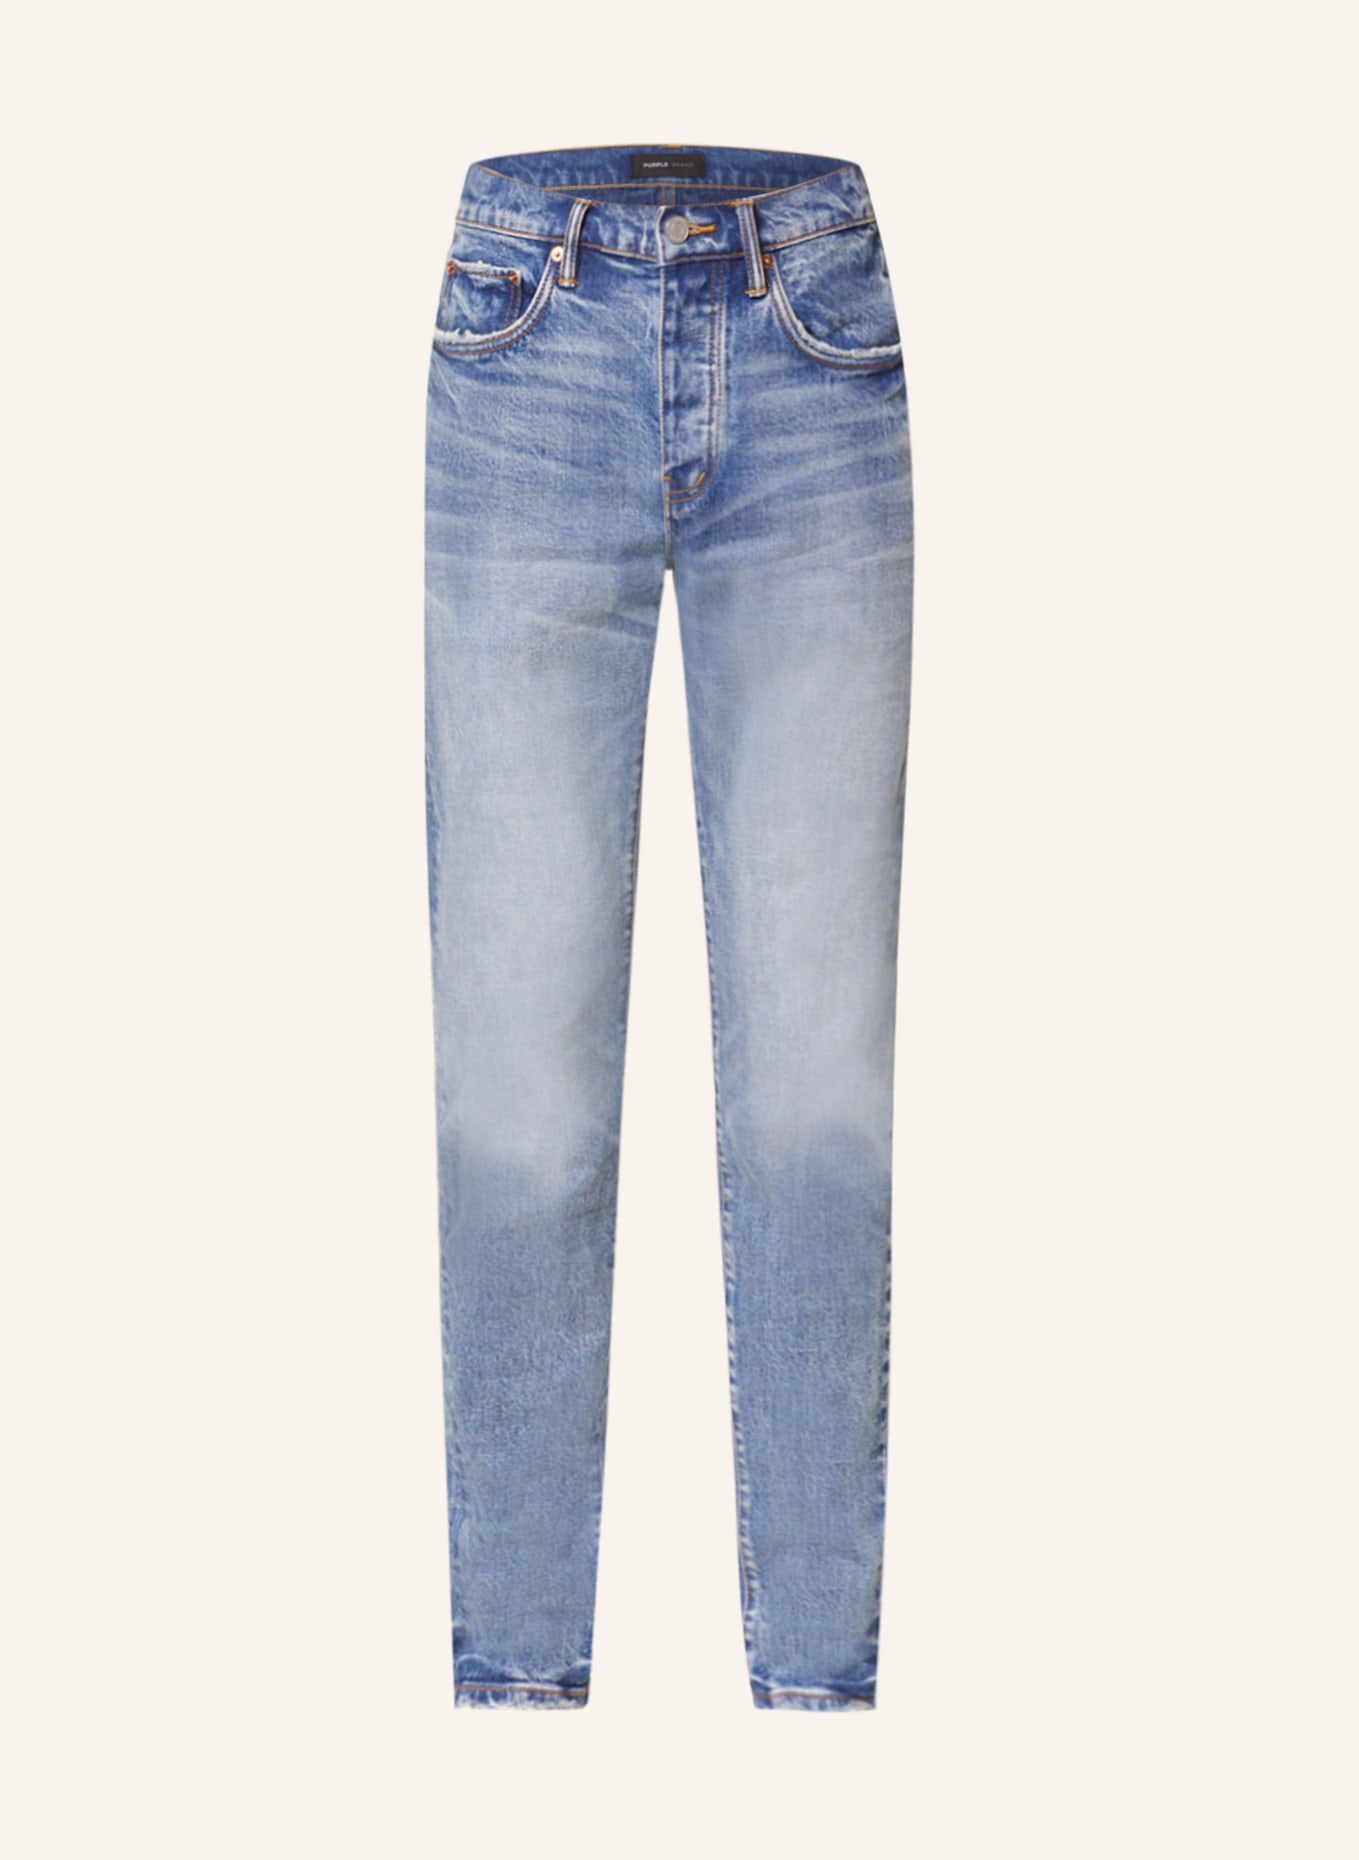 PURPLE BRAND Jeans Slim Fit, Farbe: MDWV MID INDIGO WORN (Bild 1)